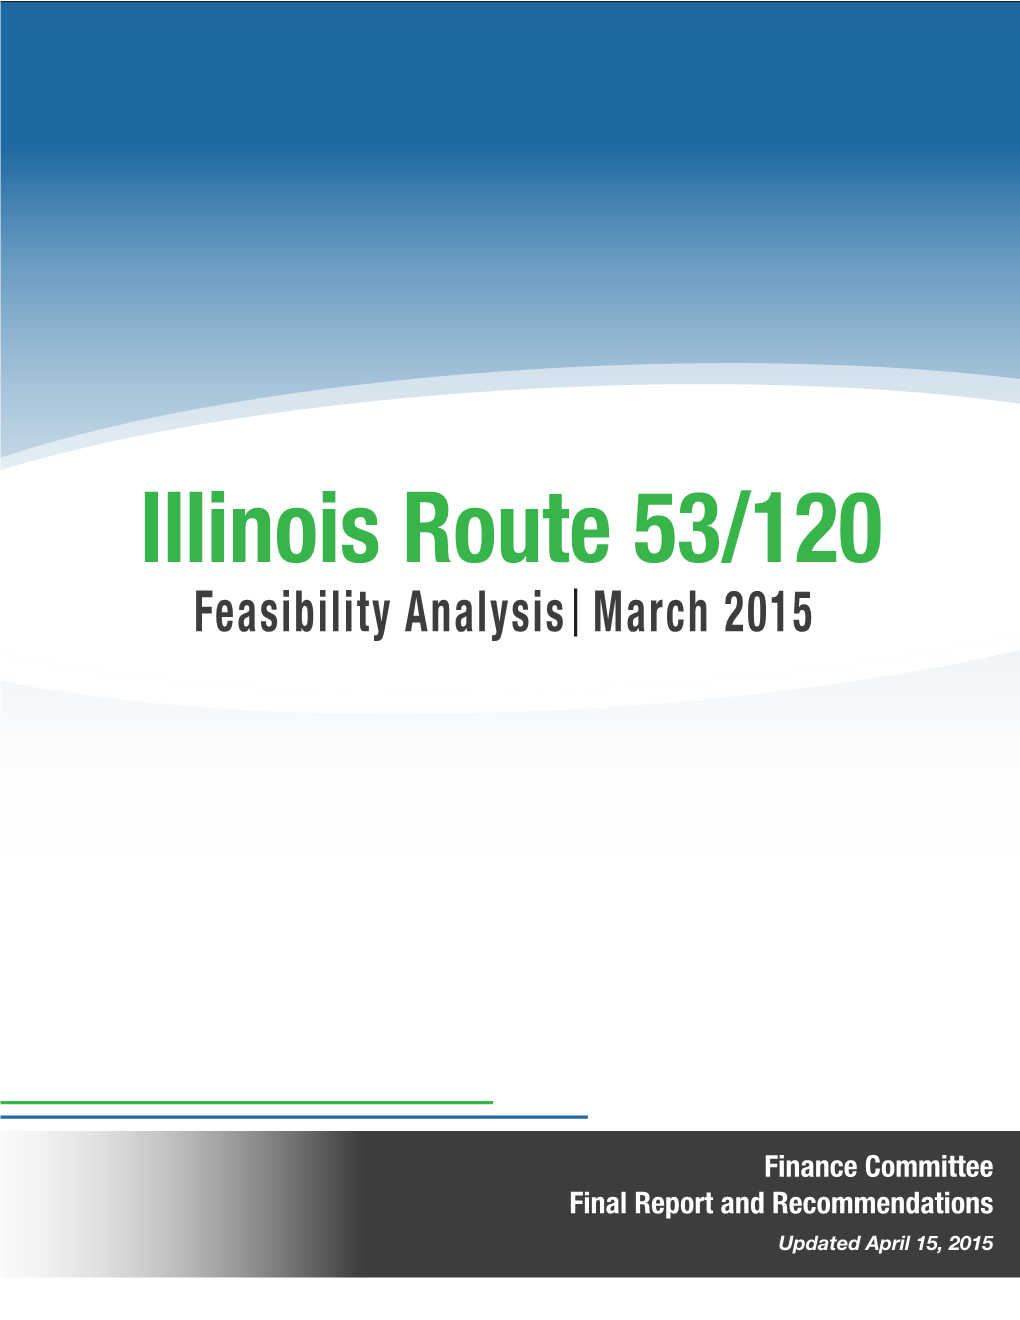 Illinois Route 53/120 Feasibility Analysis March 2015